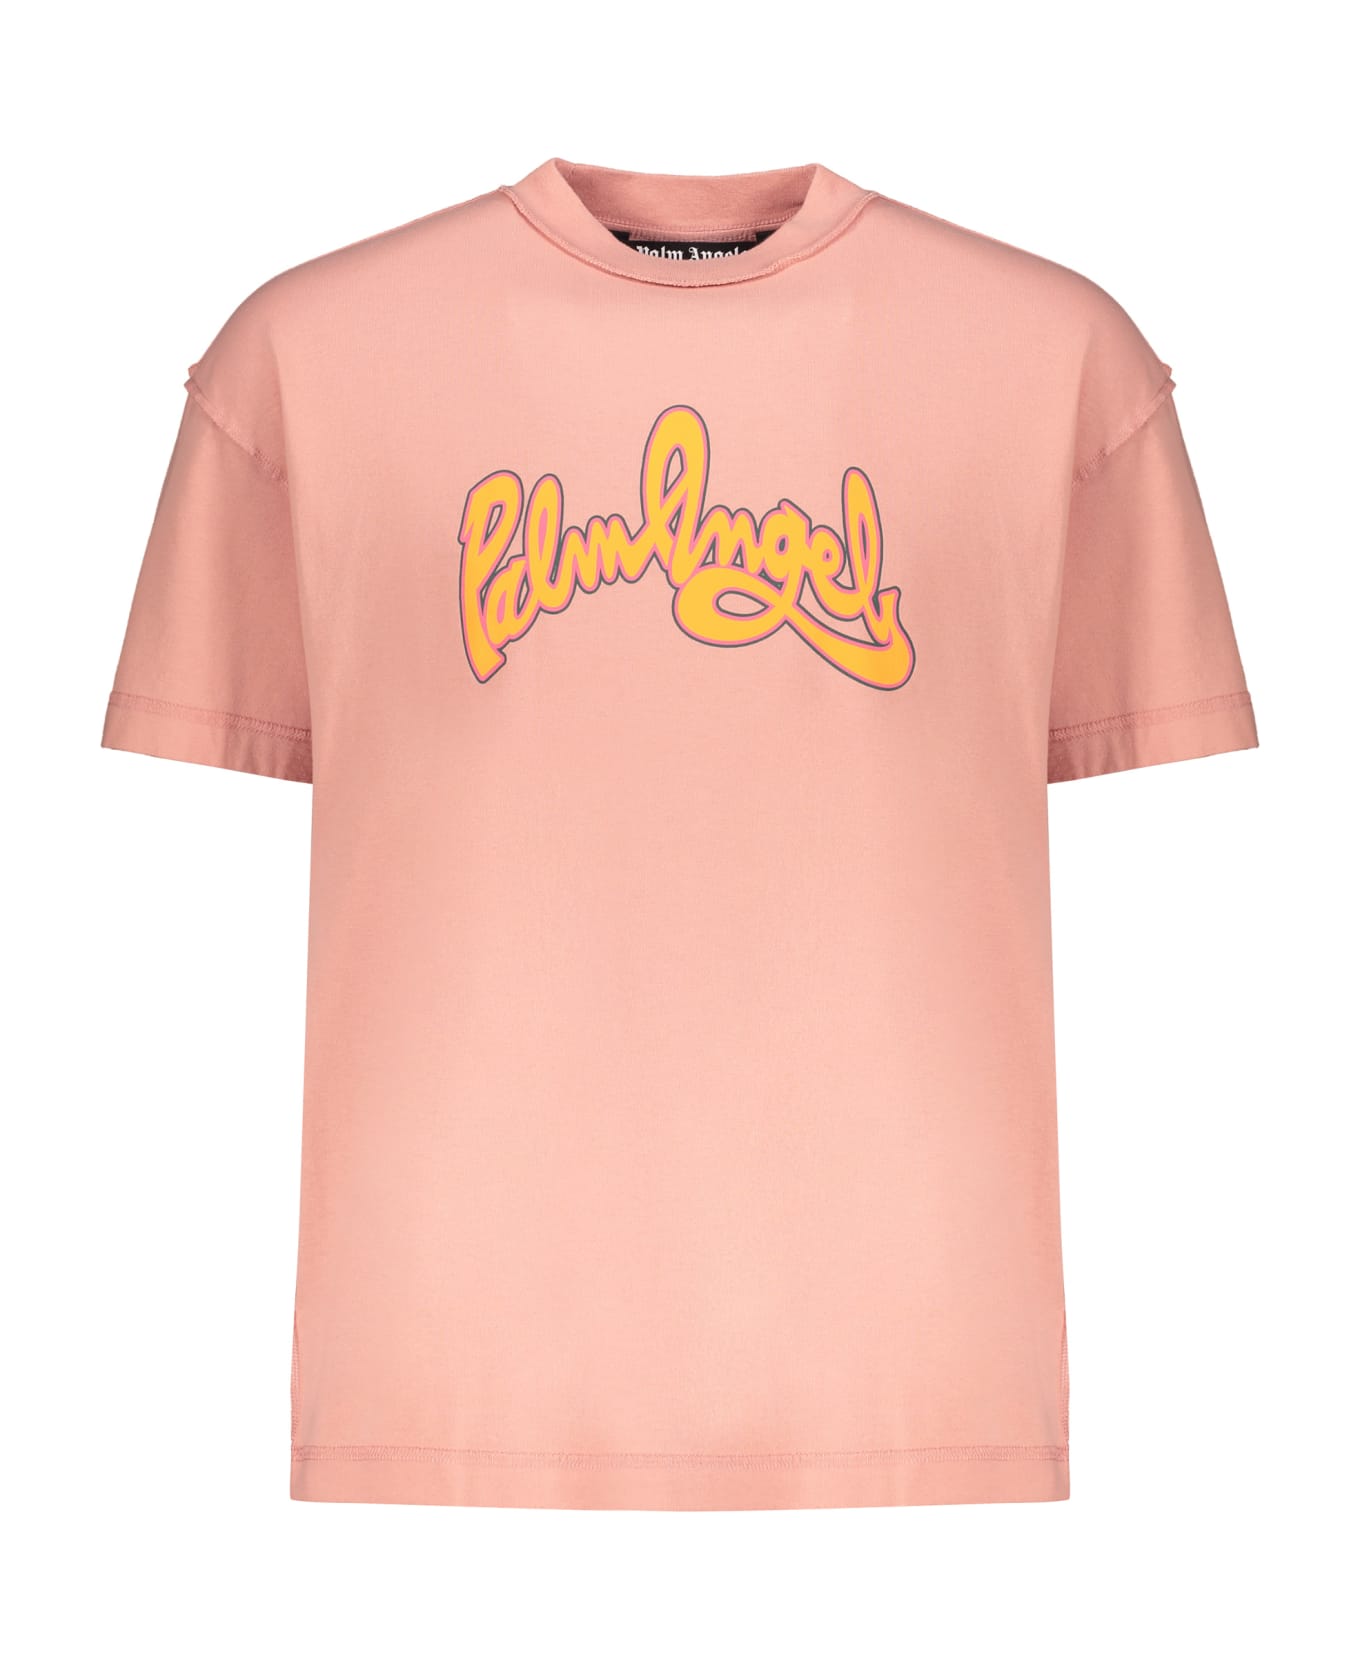 Palm Angels Cotton T-shirt - Pink